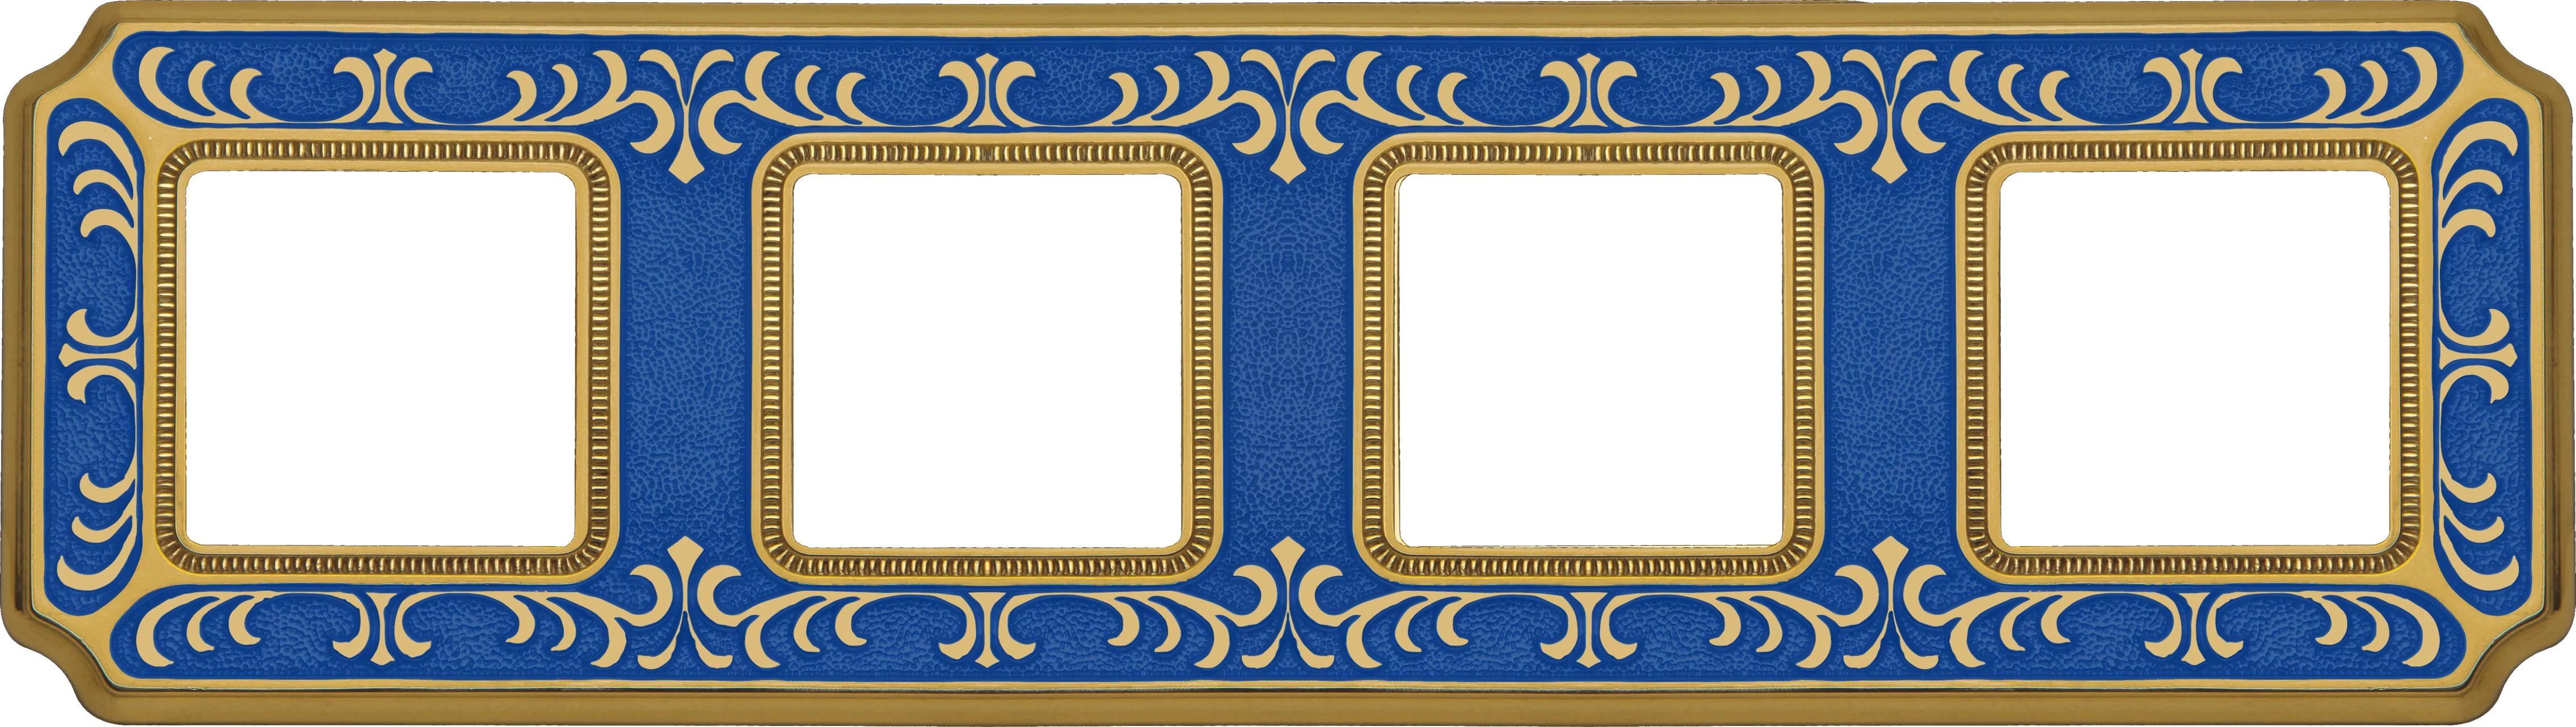  артикул FD01354AZEN название Рамка 4-ая (четверная), цвет Голубой сапфир, Siena, Fede